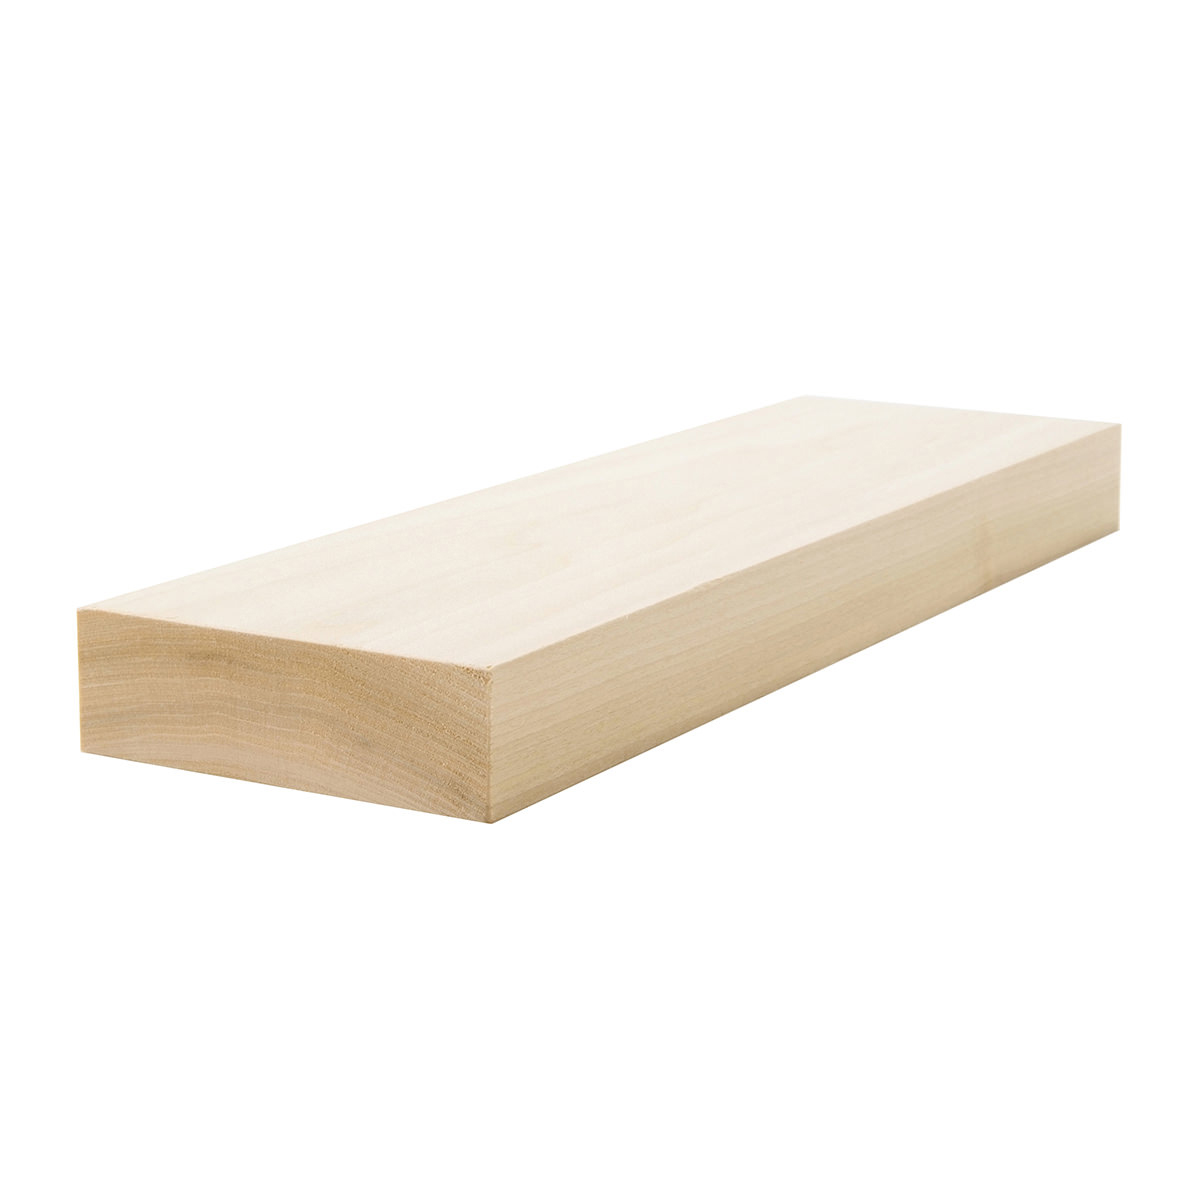 5/4x4 (1" x 31/2") Poplar S4S Lumber, Boards, & Flat